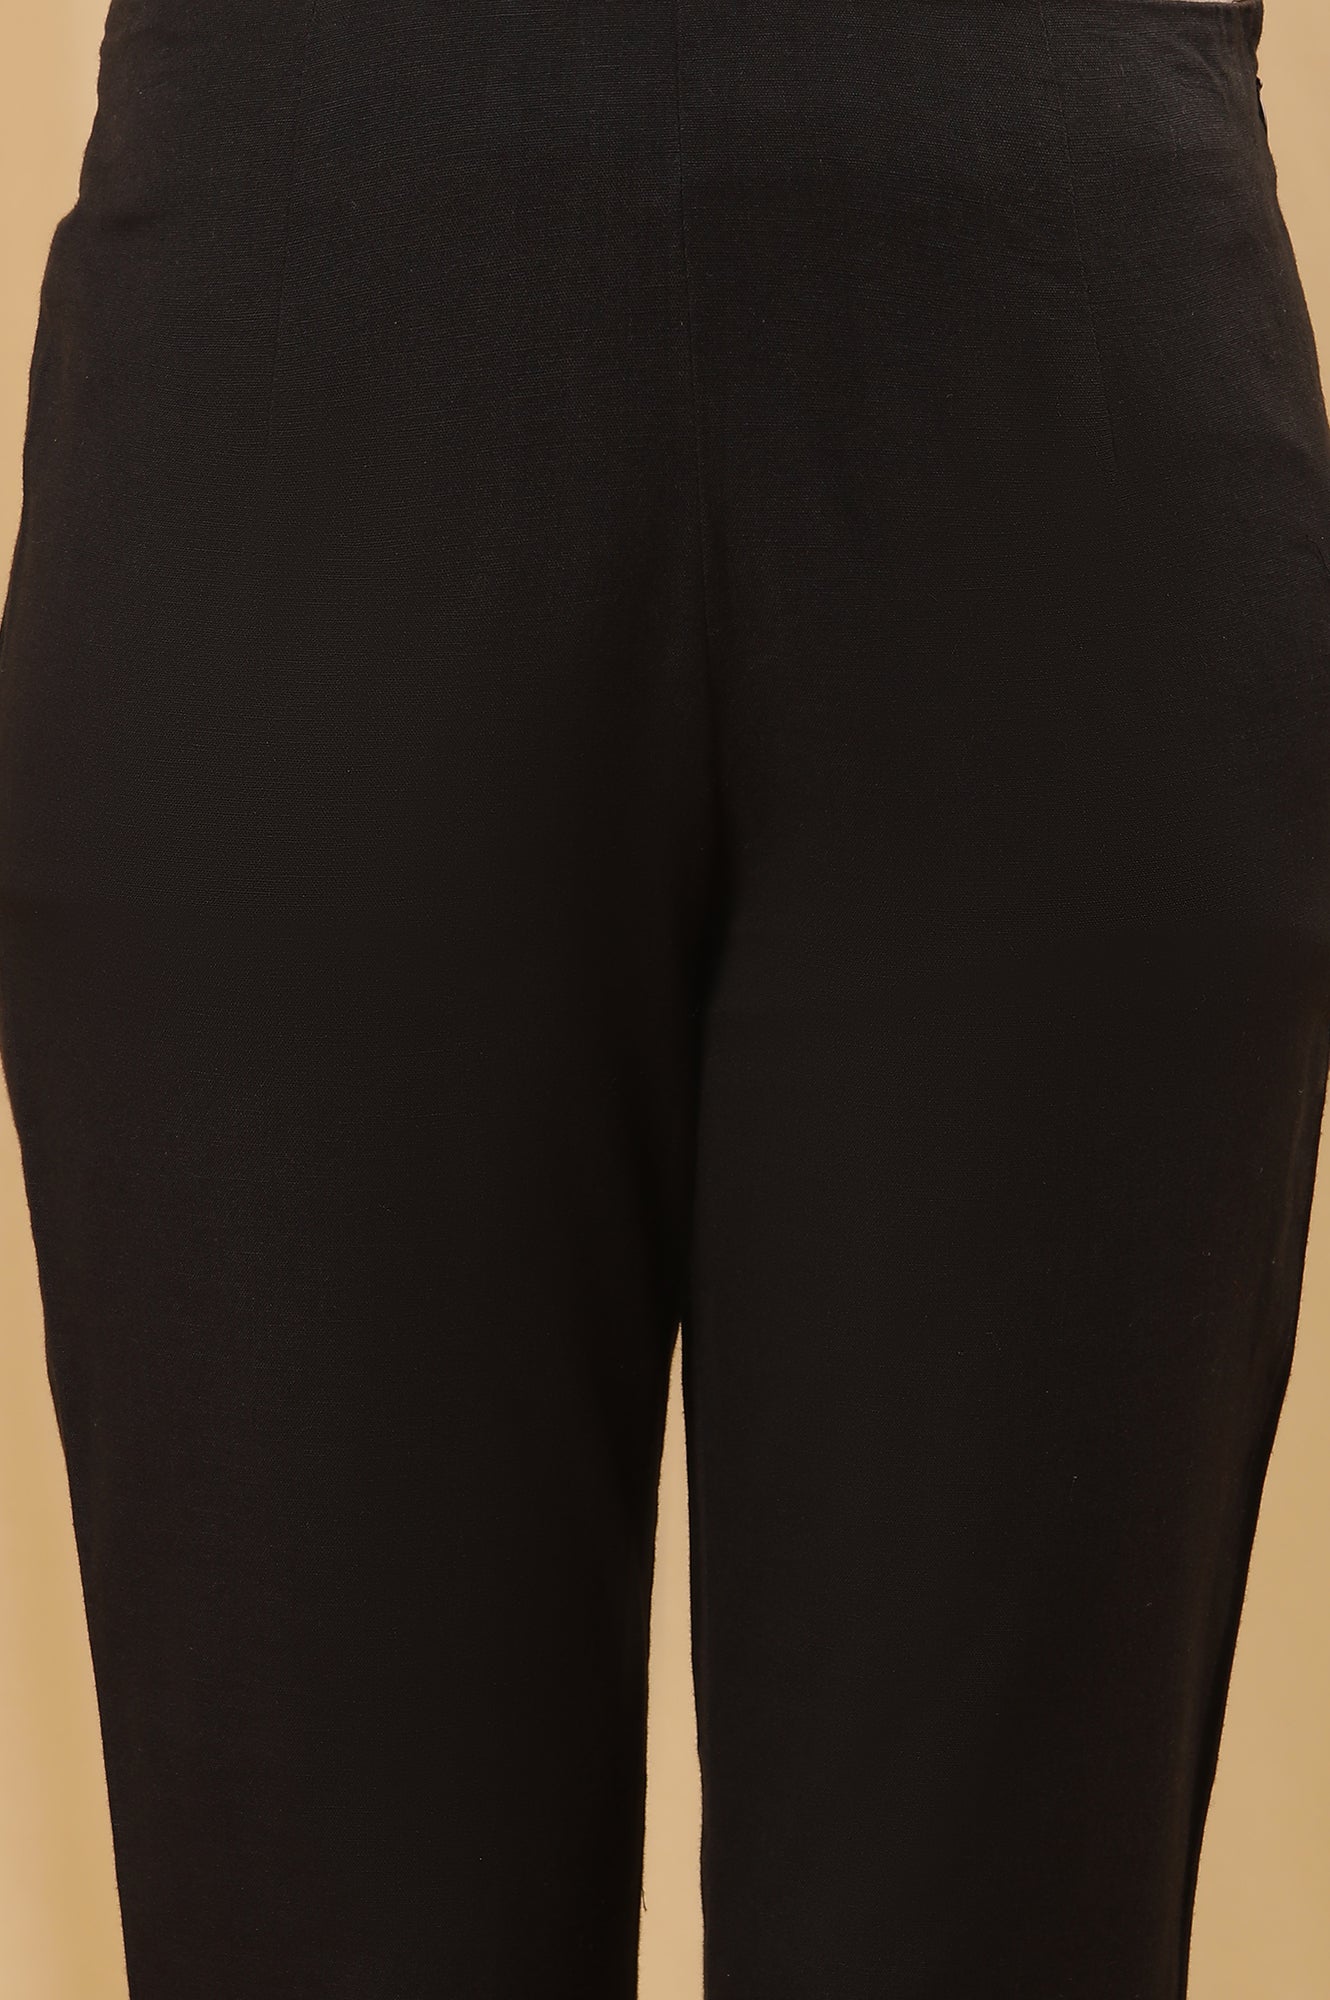 Black Geometric Printed Kurta And Trousers Set